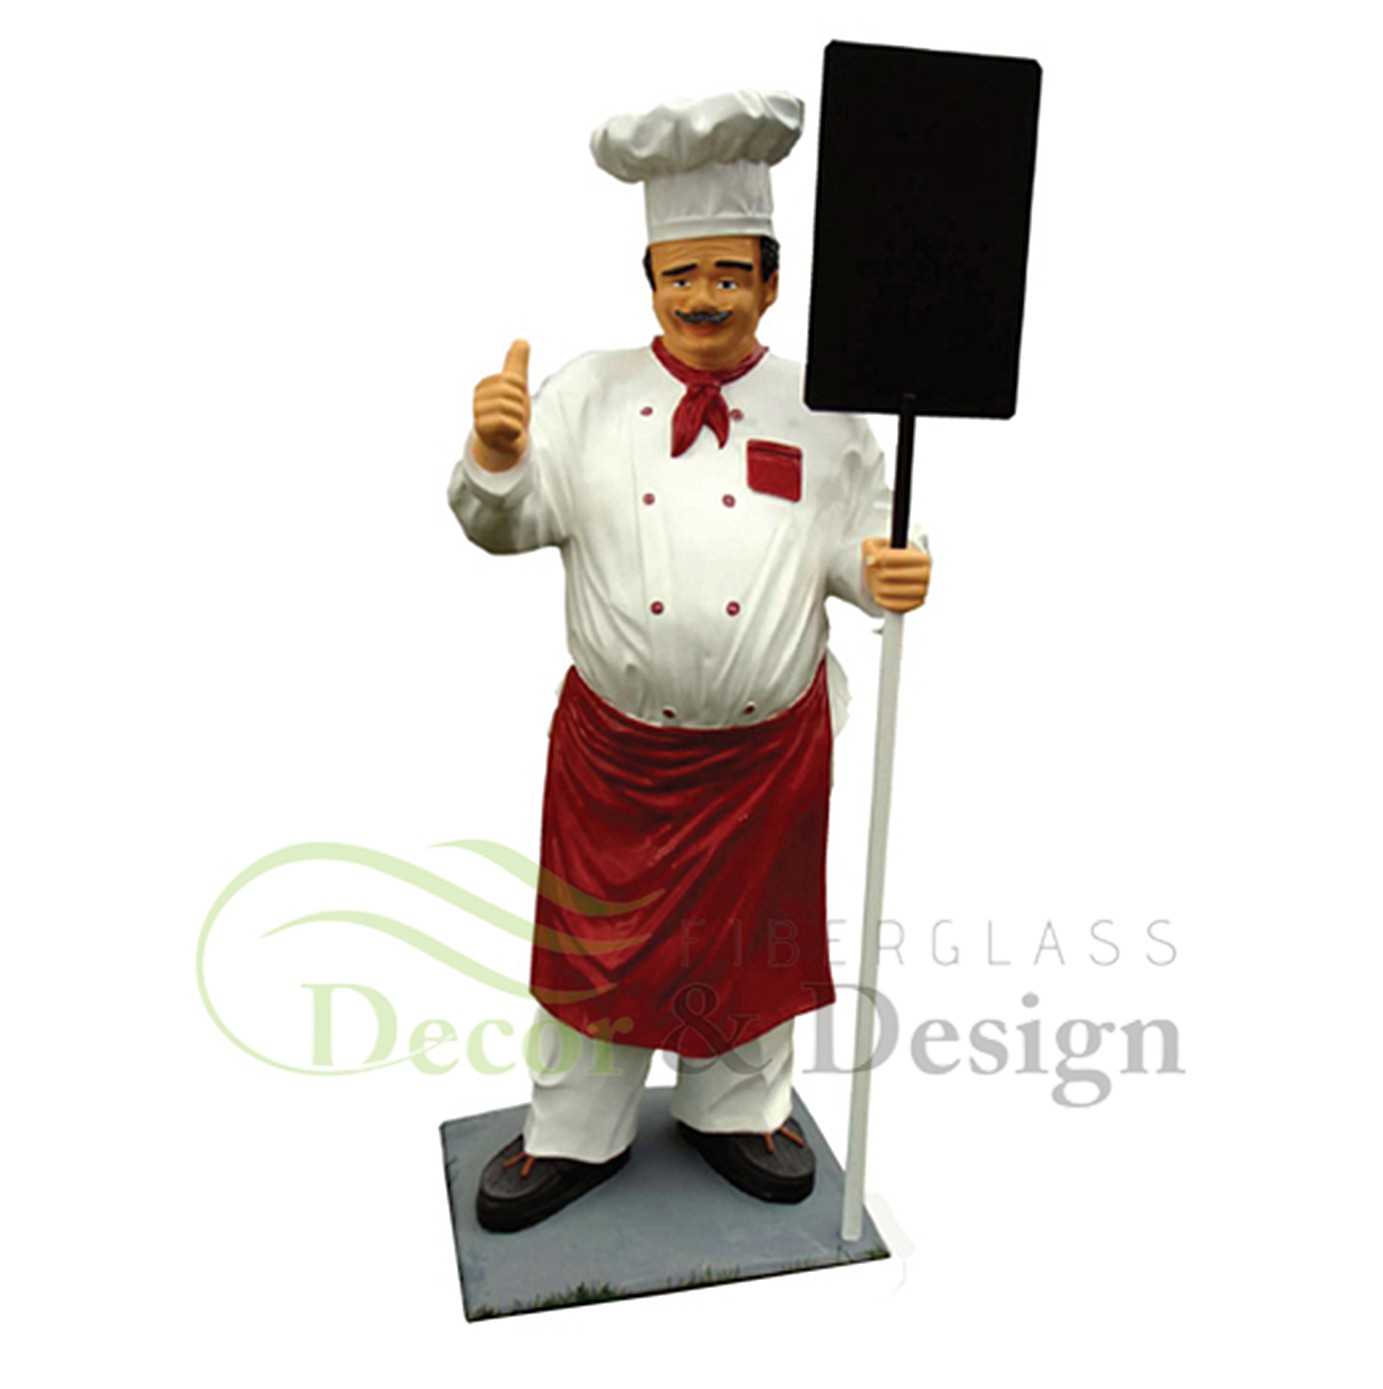 Decorative figure Design menu Fiberglass Decor Statue sp. & witch - z Chef